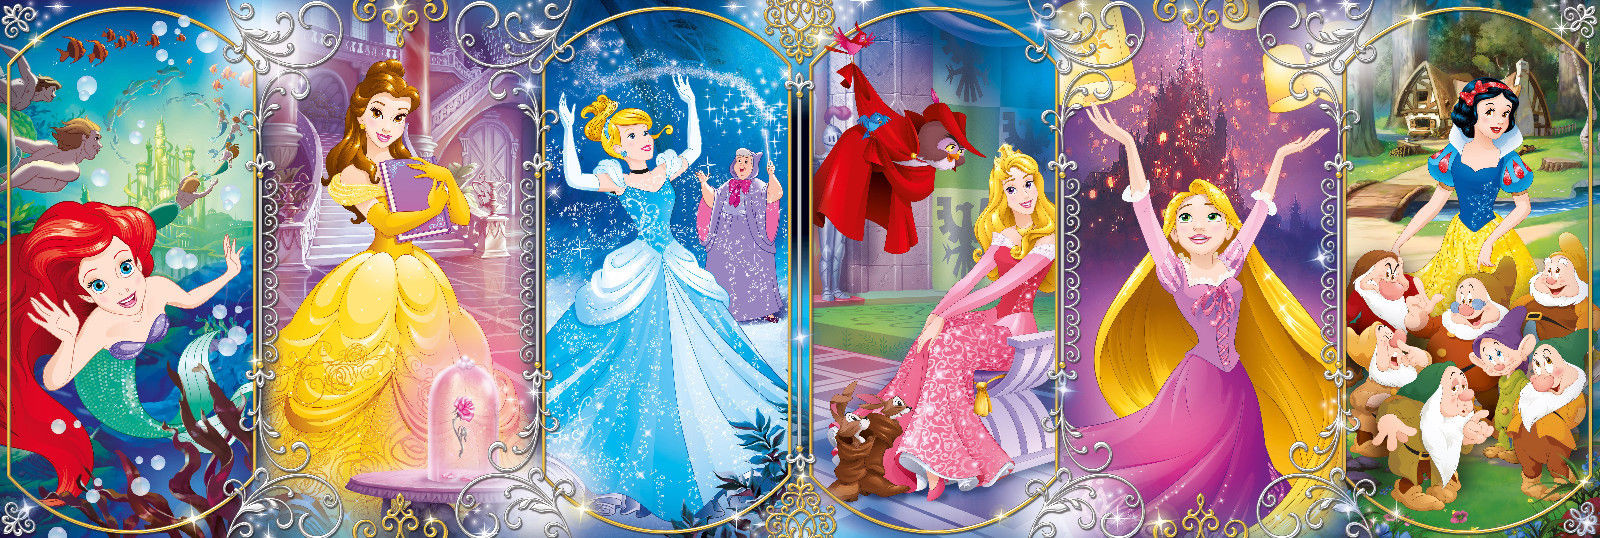 Clementoni 39390 Puzzle 1000 Teile Disney Princess Collection Panorama